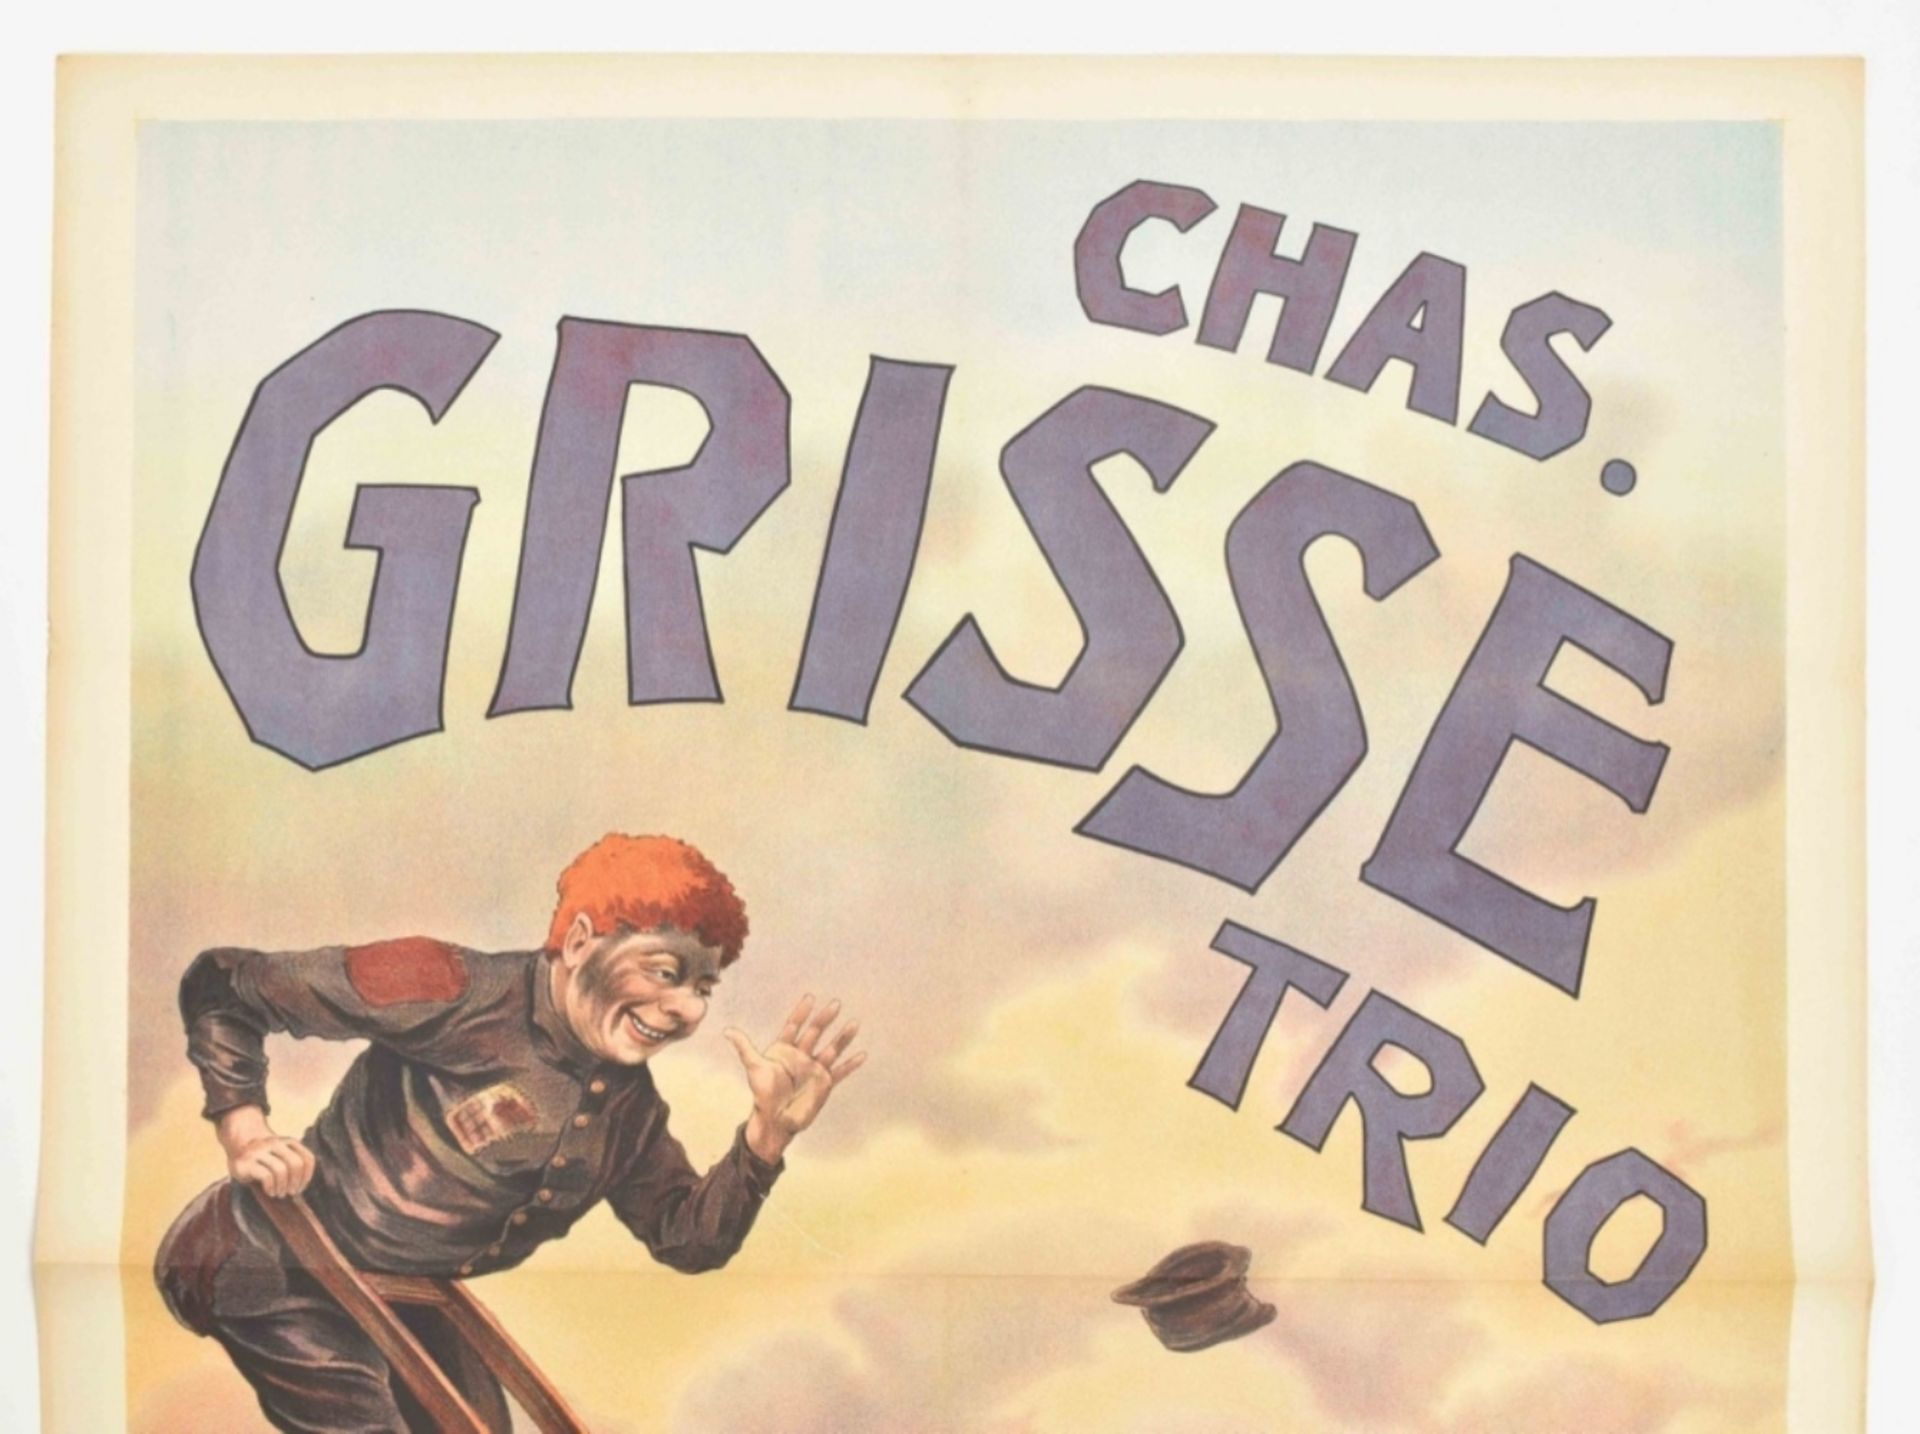 [Clowns] [Vaudeville. Chimney Sweepers. Acrobatics] Chas. Grisse trio Friedländer, Hamburg, 1907 - Image 7 of 7